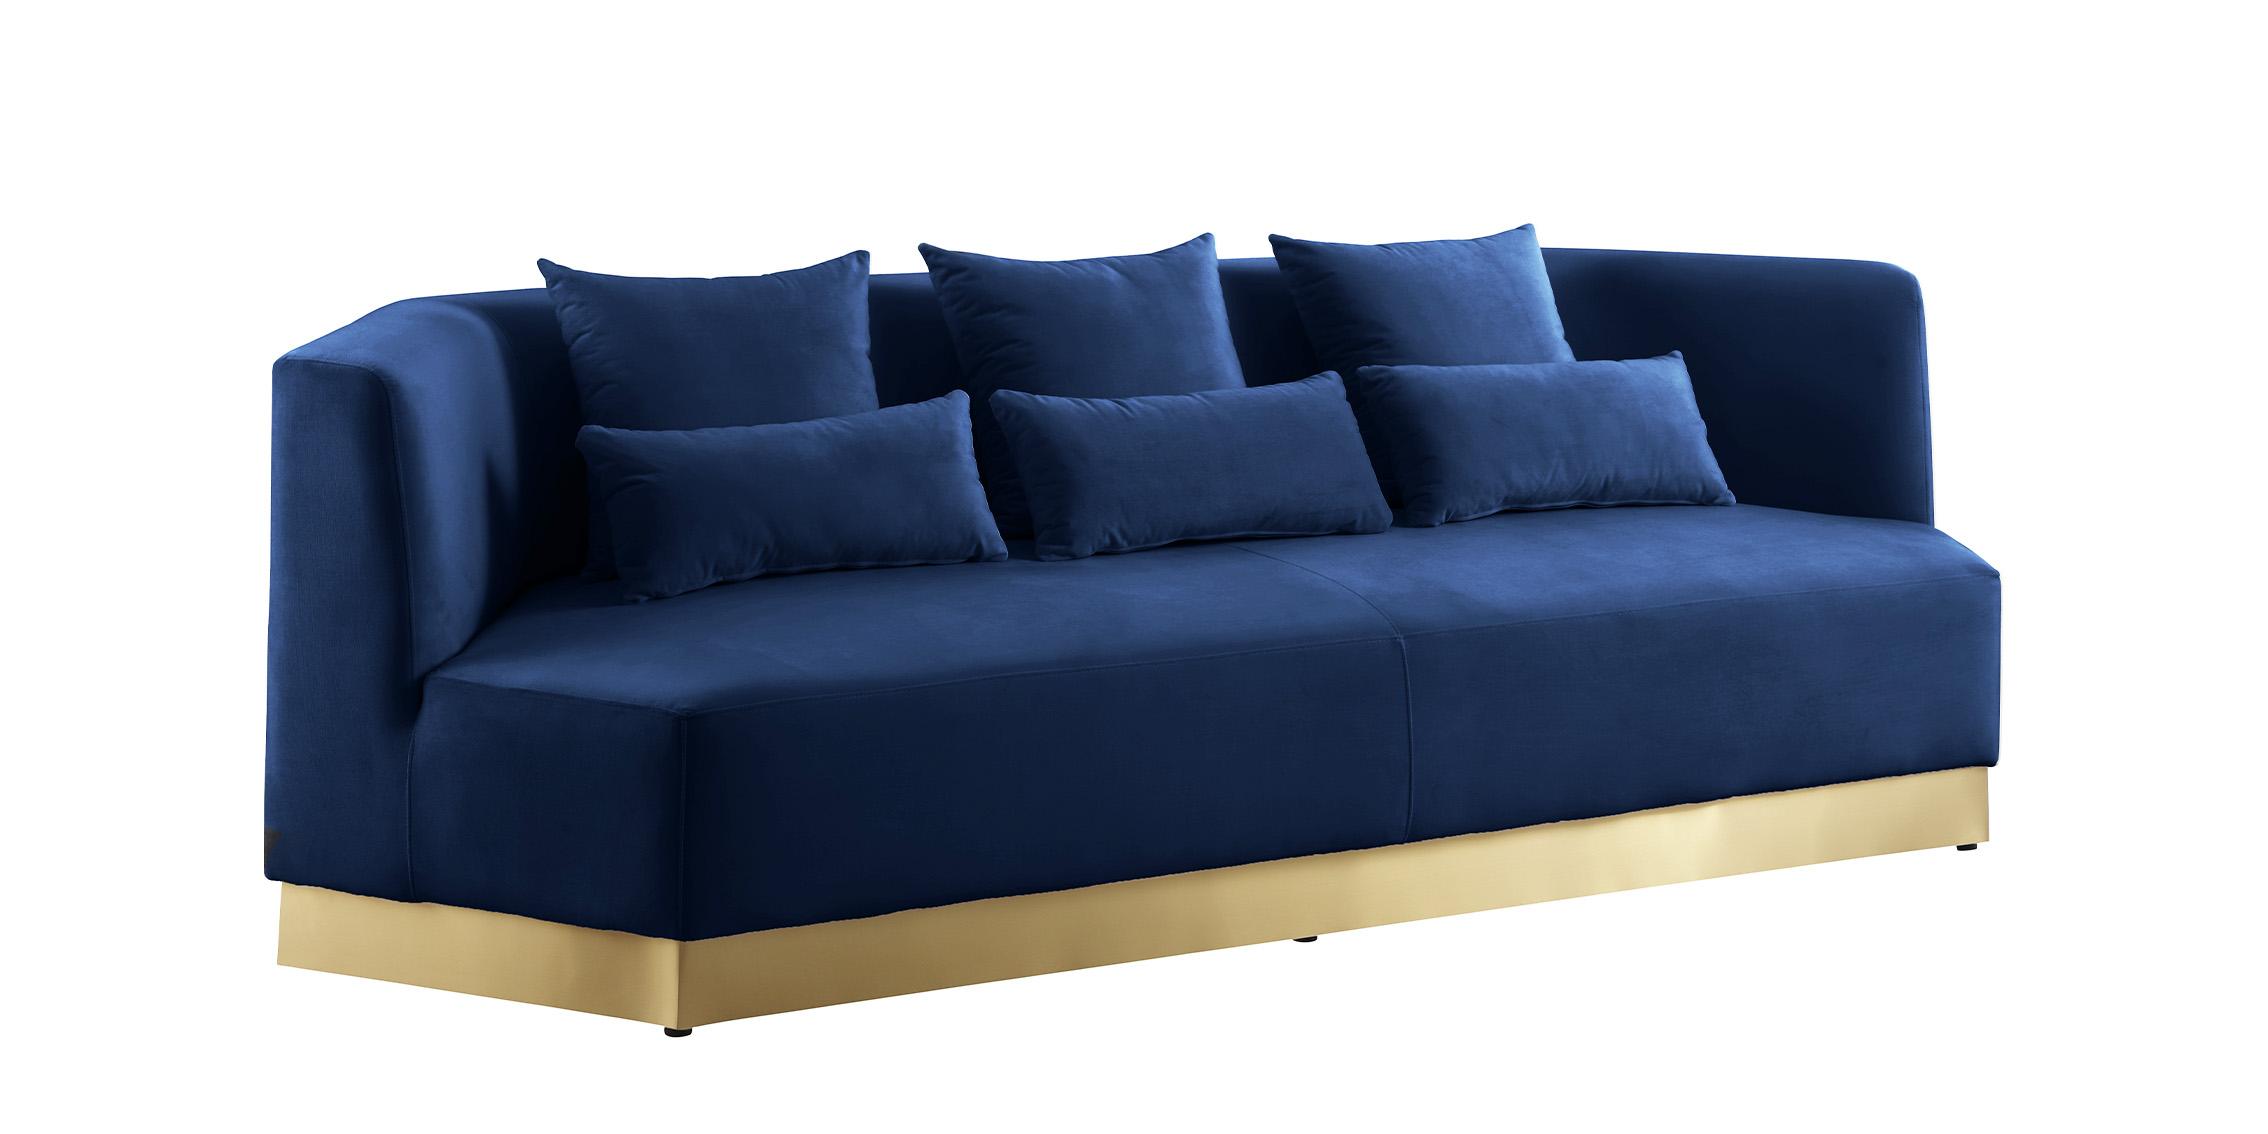 Contemporary Sofa MARQUIS 600Navy 600Navy-S in Navy blue Velvet